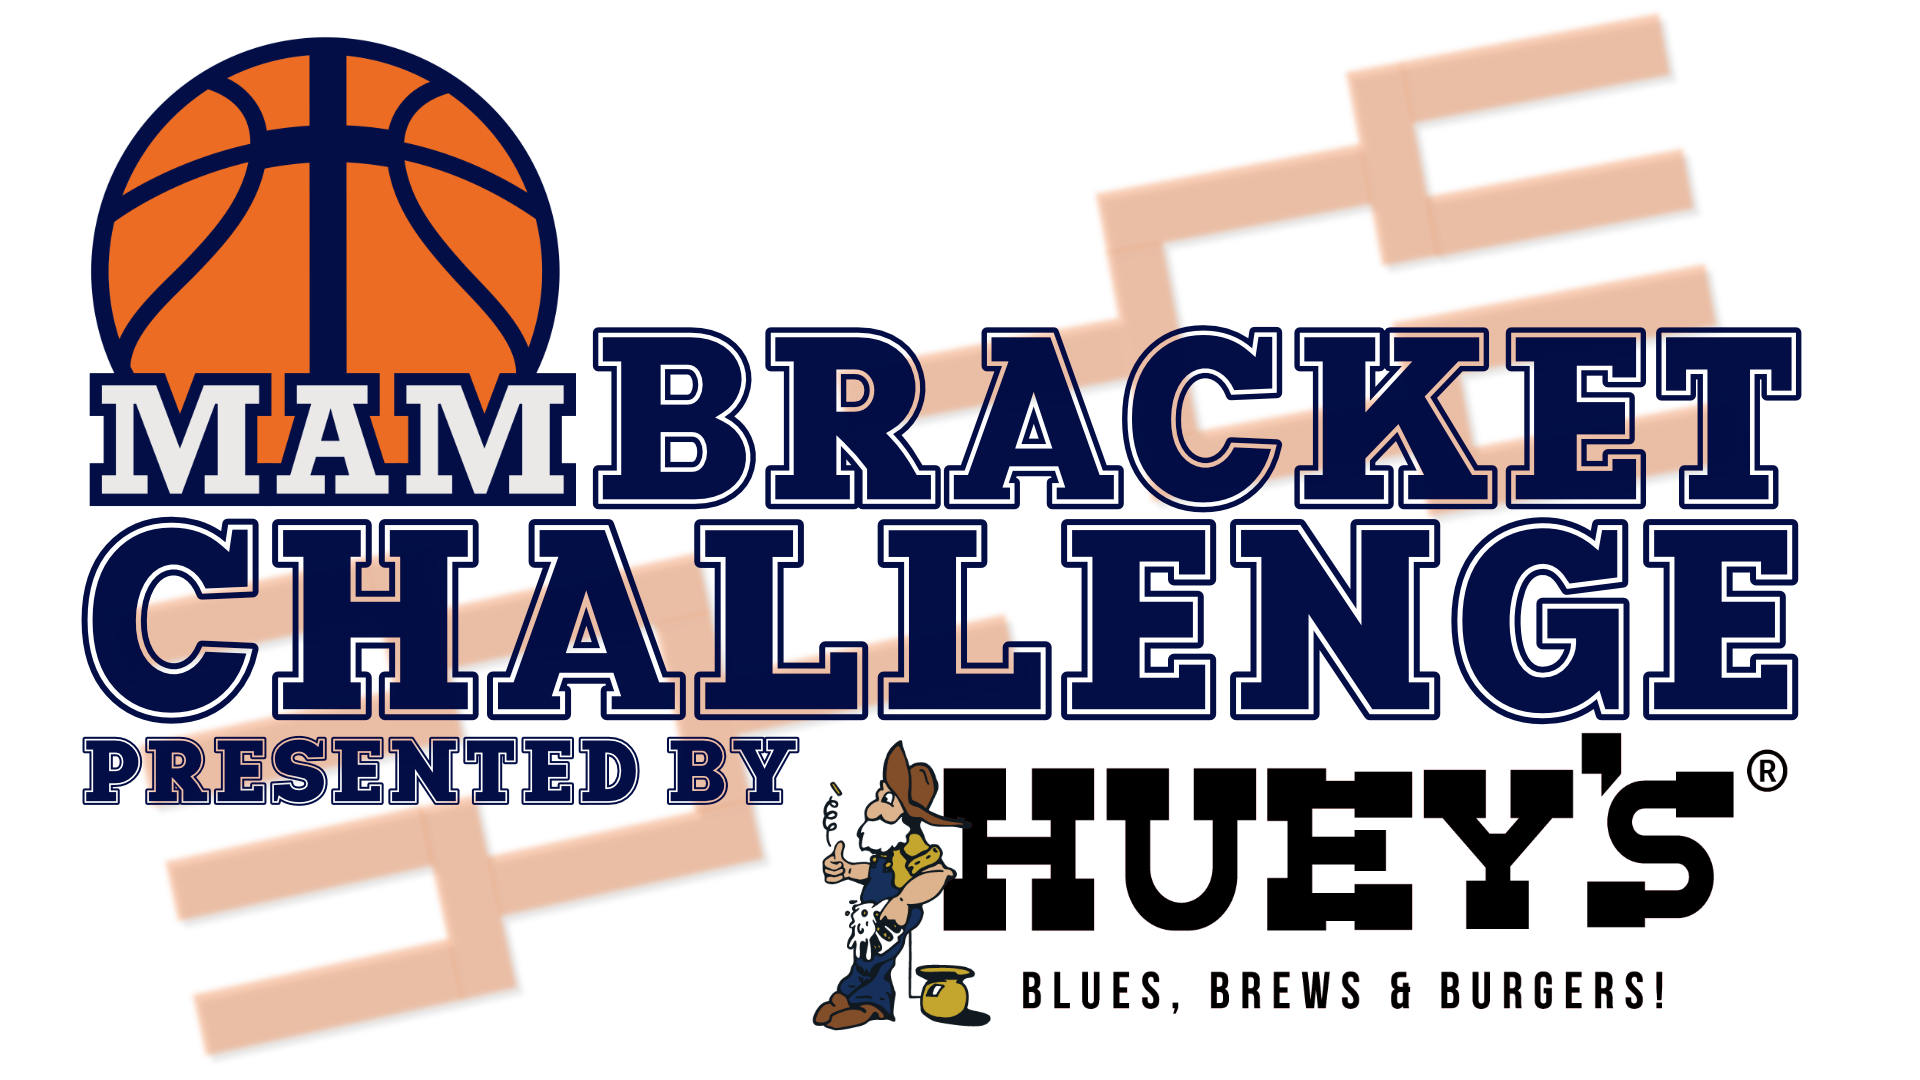 The logo for the MAM Bracket Challenge.